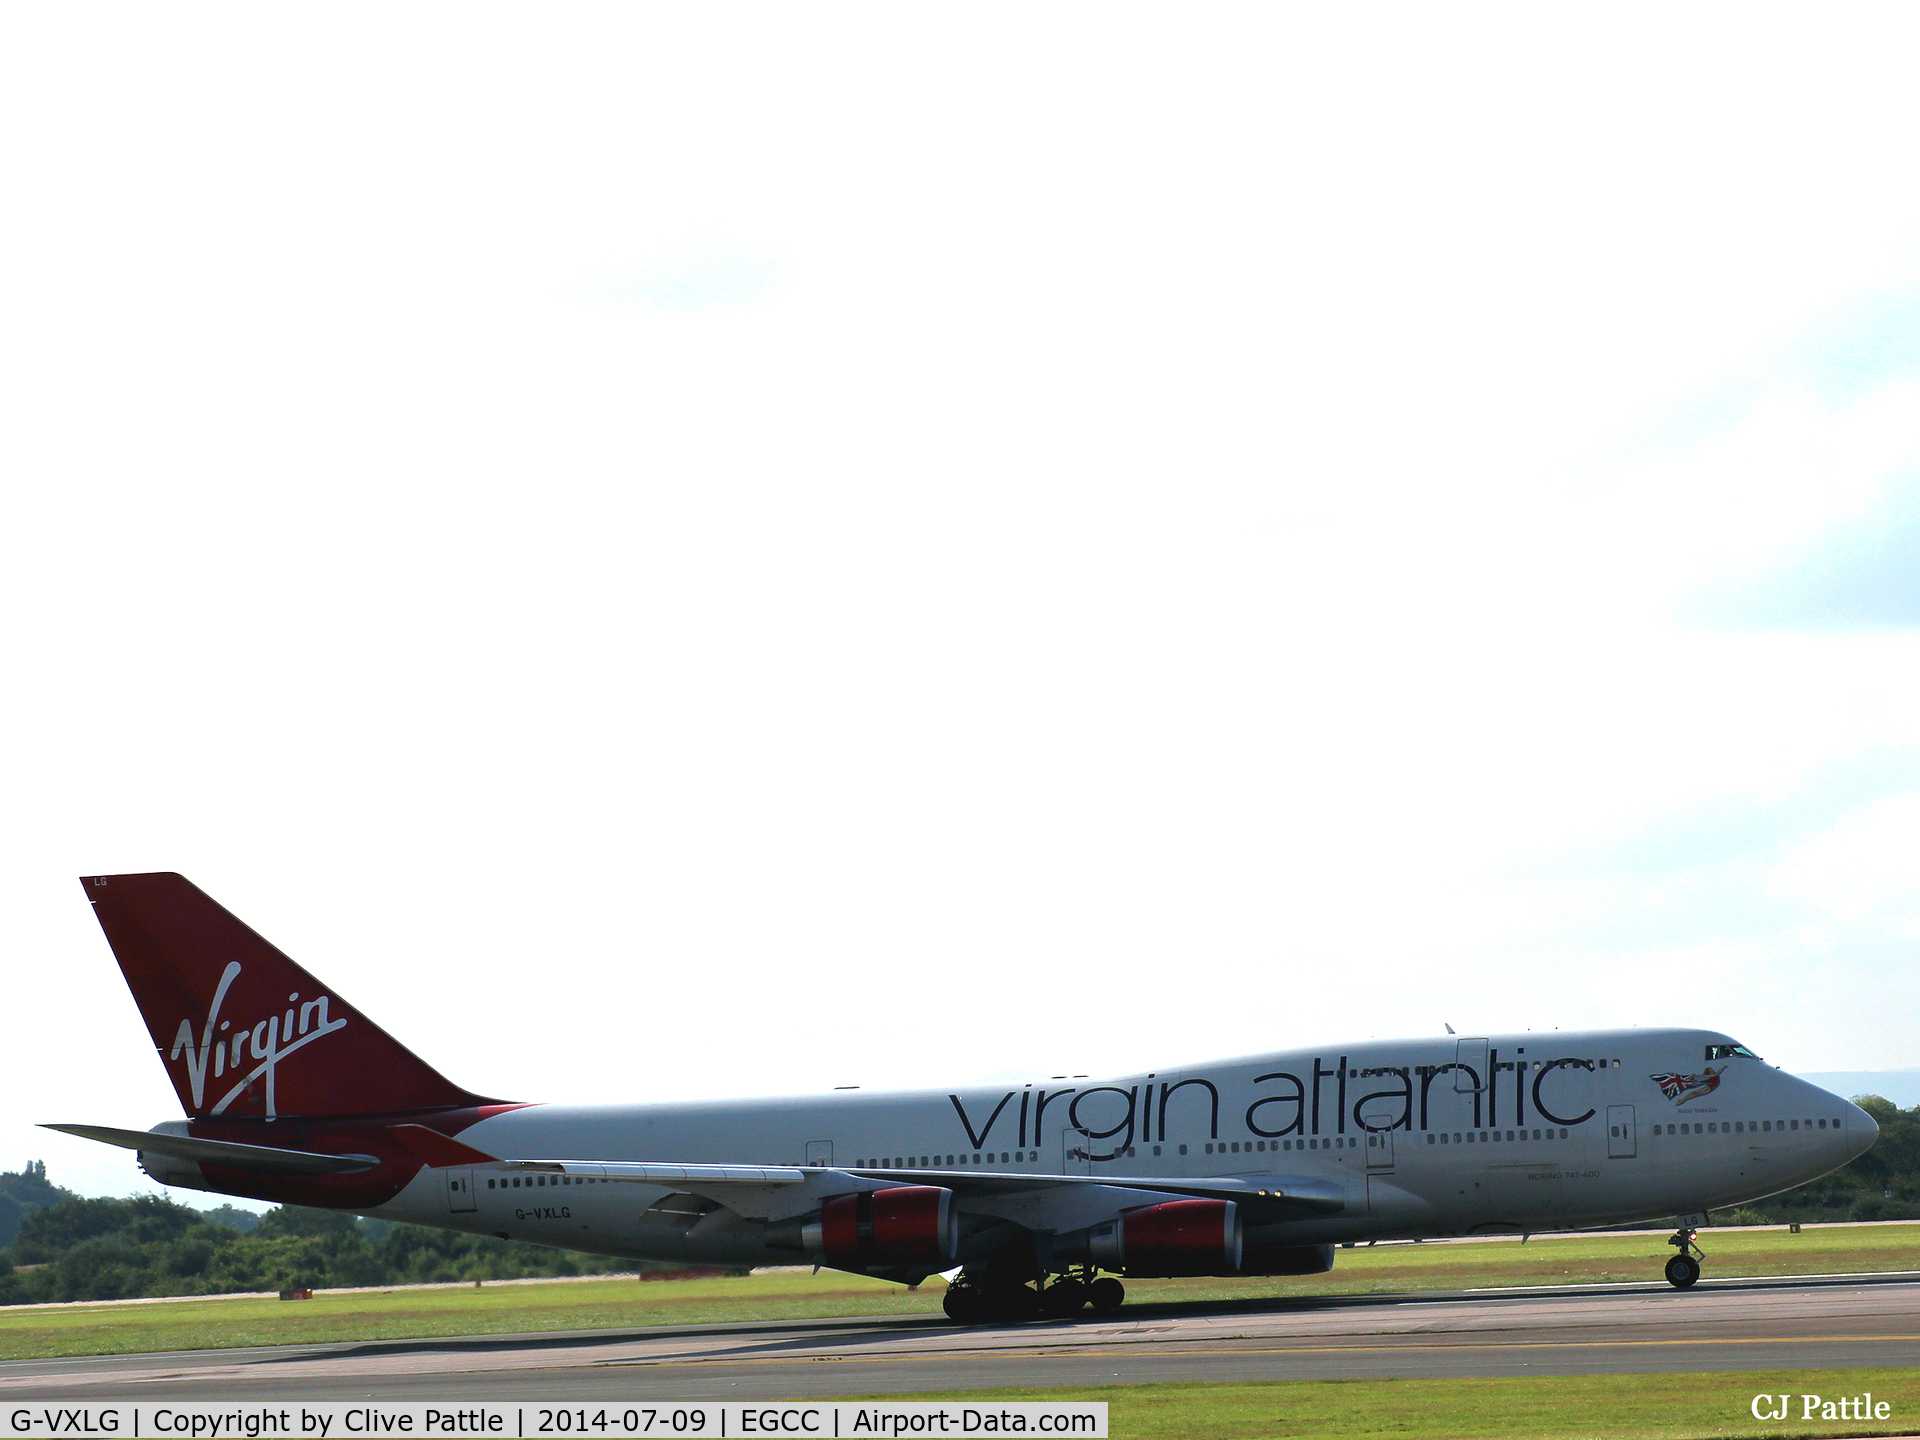 G-VXLG, 1998 Boeing 747-41R C/N 29406, Arrival at Manchester